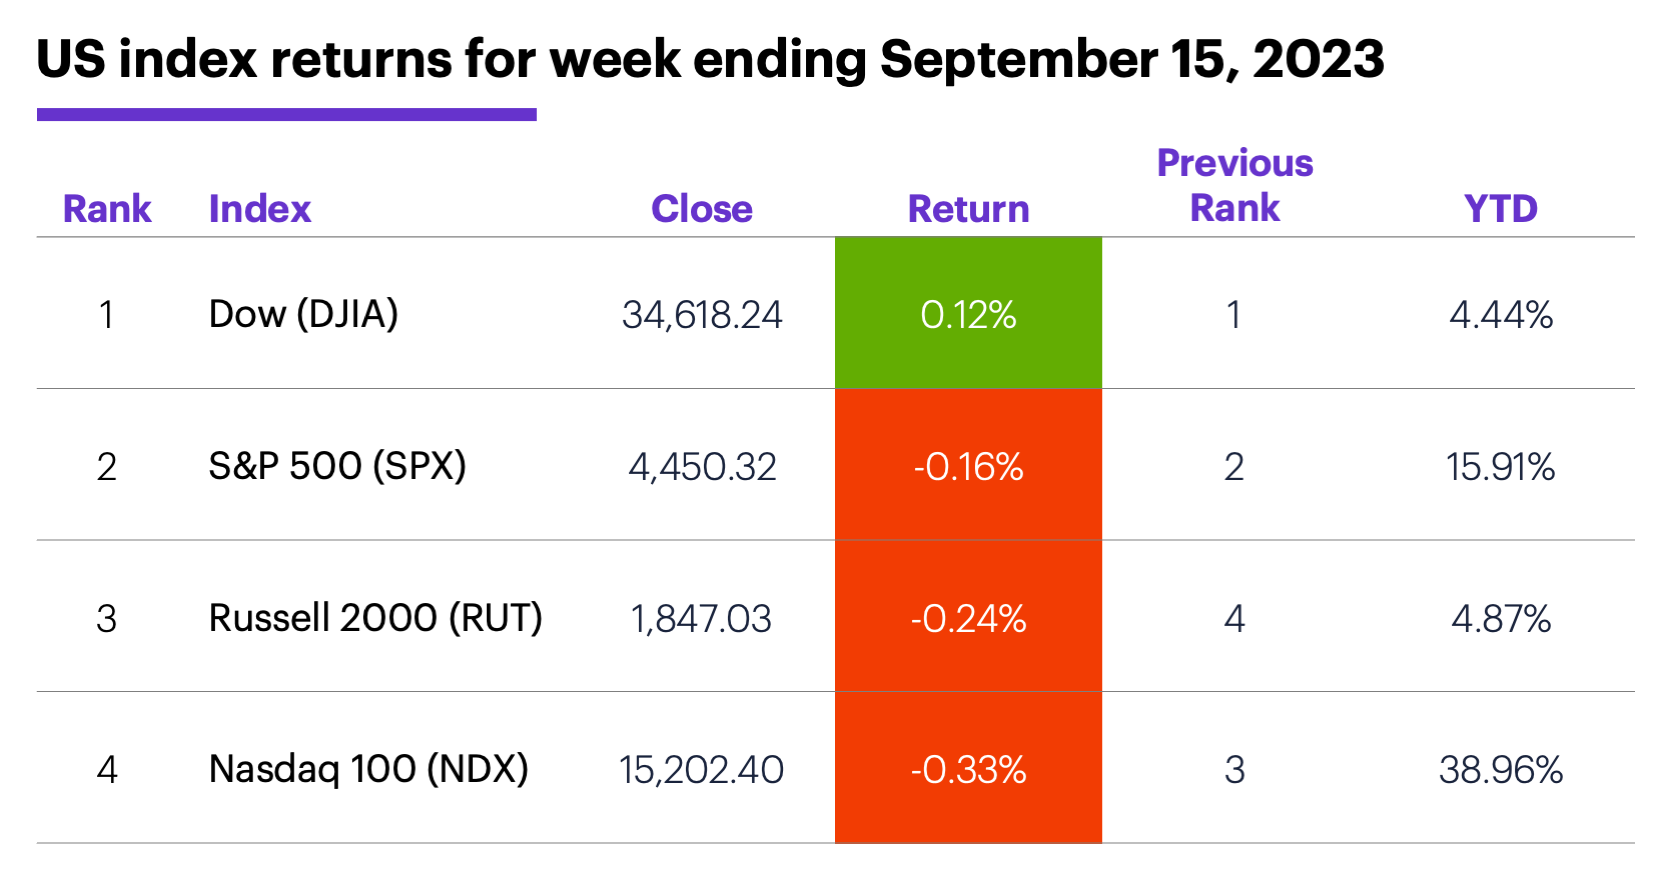 US stock index performance for week ending 9/15/23. S&P 500 (SPX), Nasdaq 100 (NDX), Russell 2000 (RUT), Dow Jones Industrial Average (DJIA).